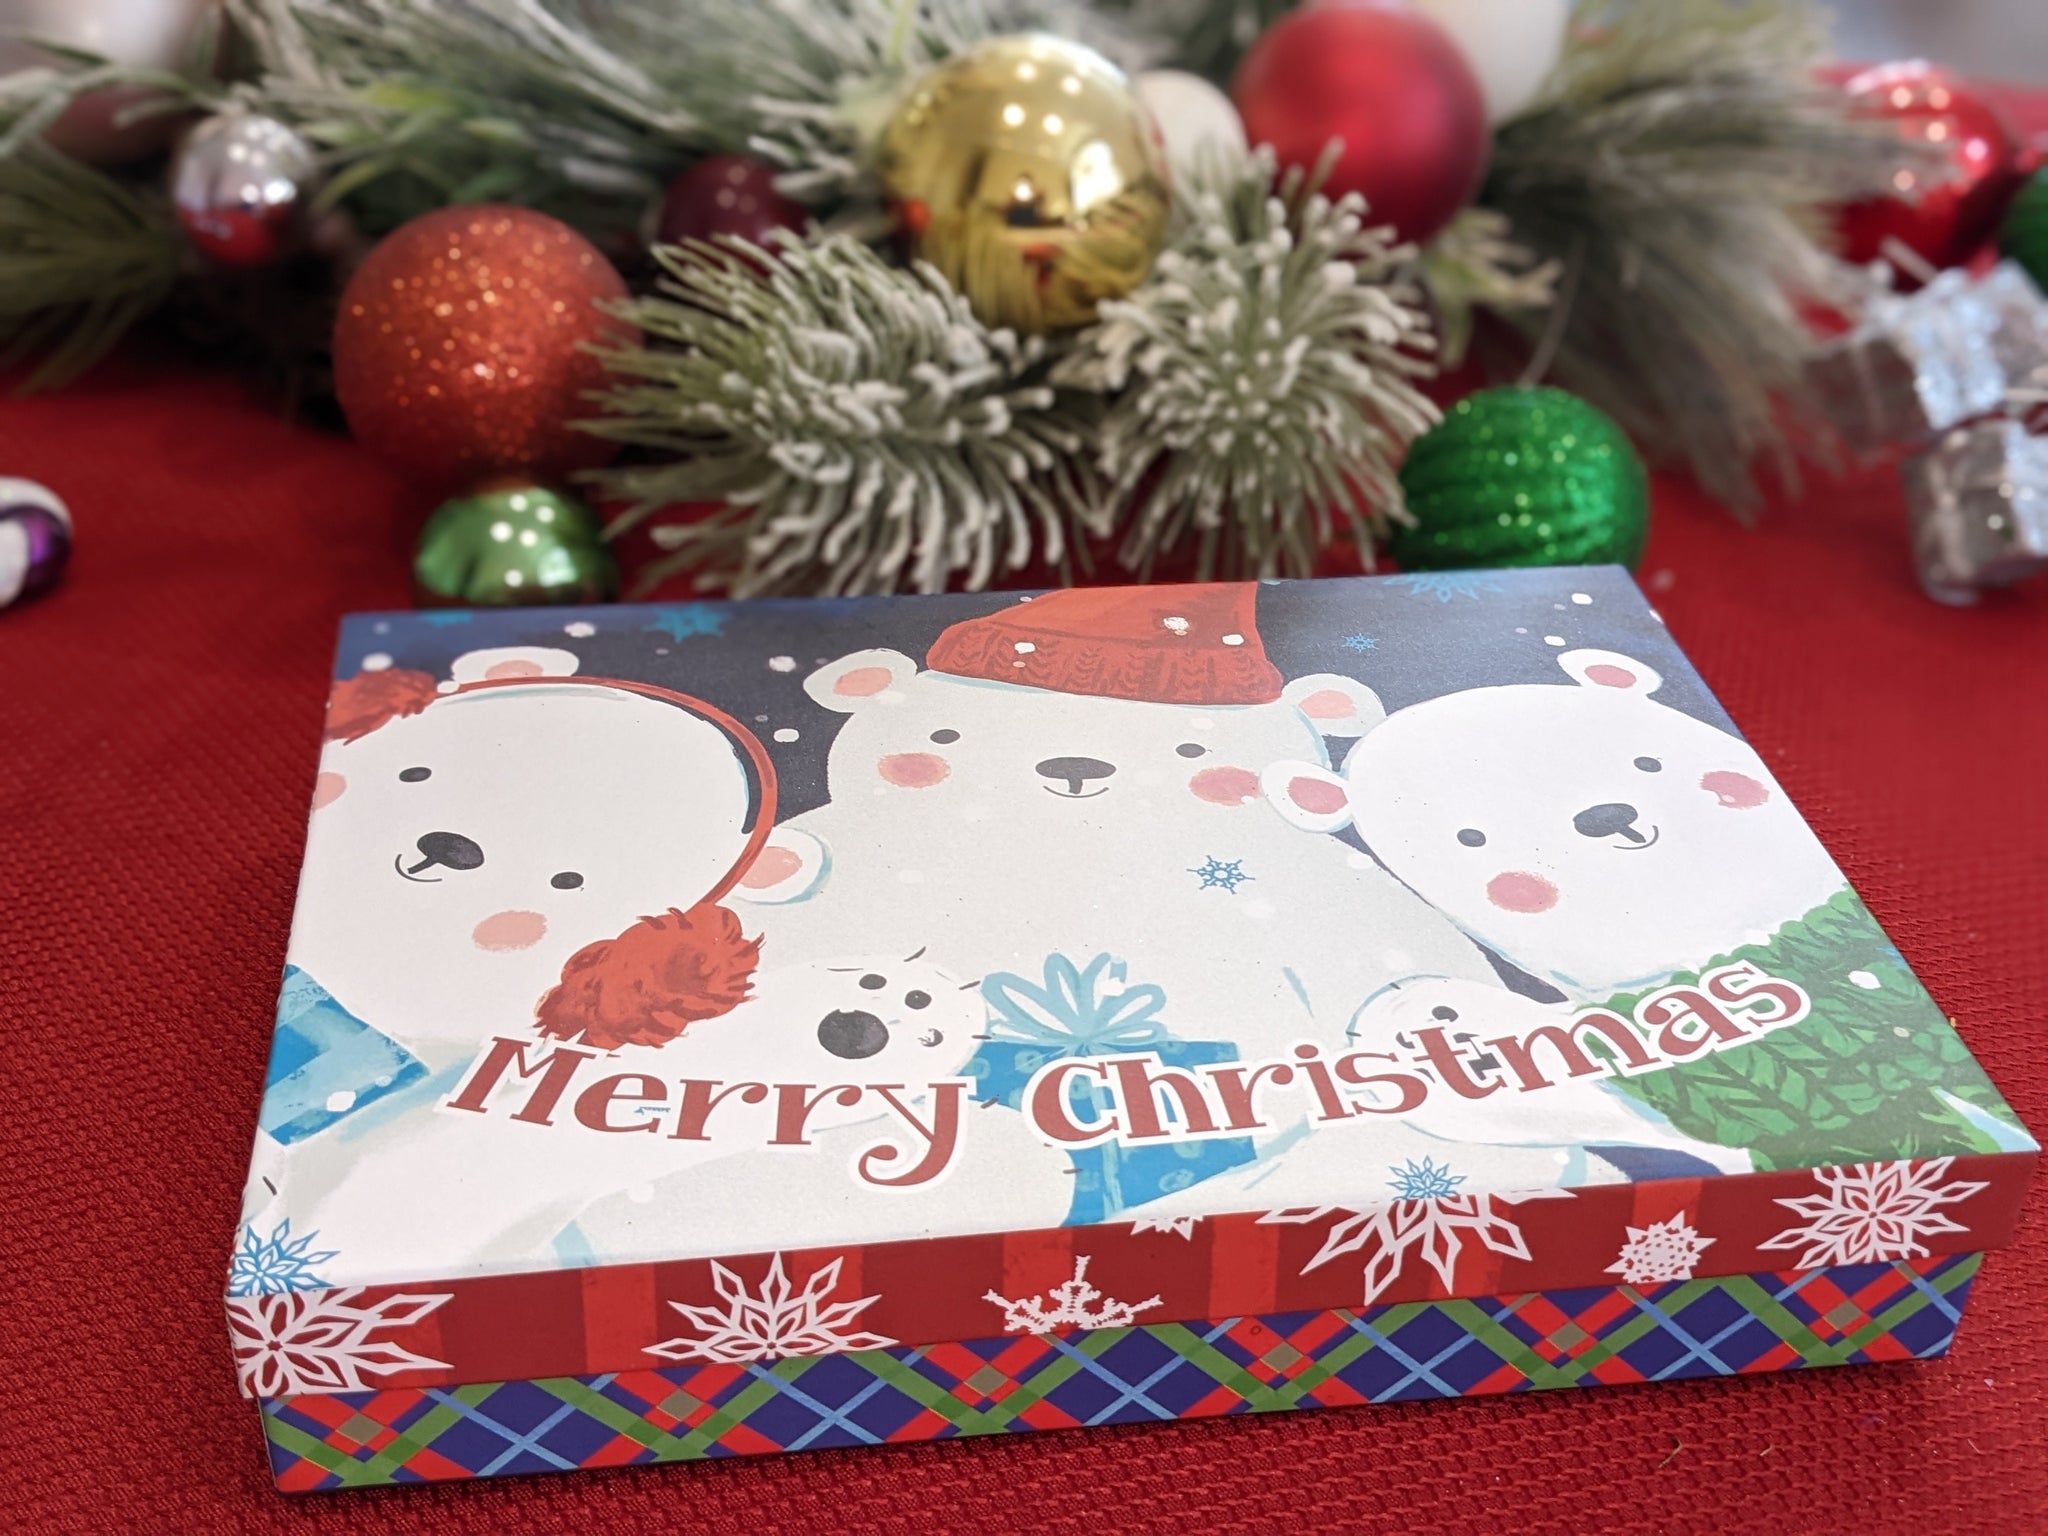 Make Merry Gift Set